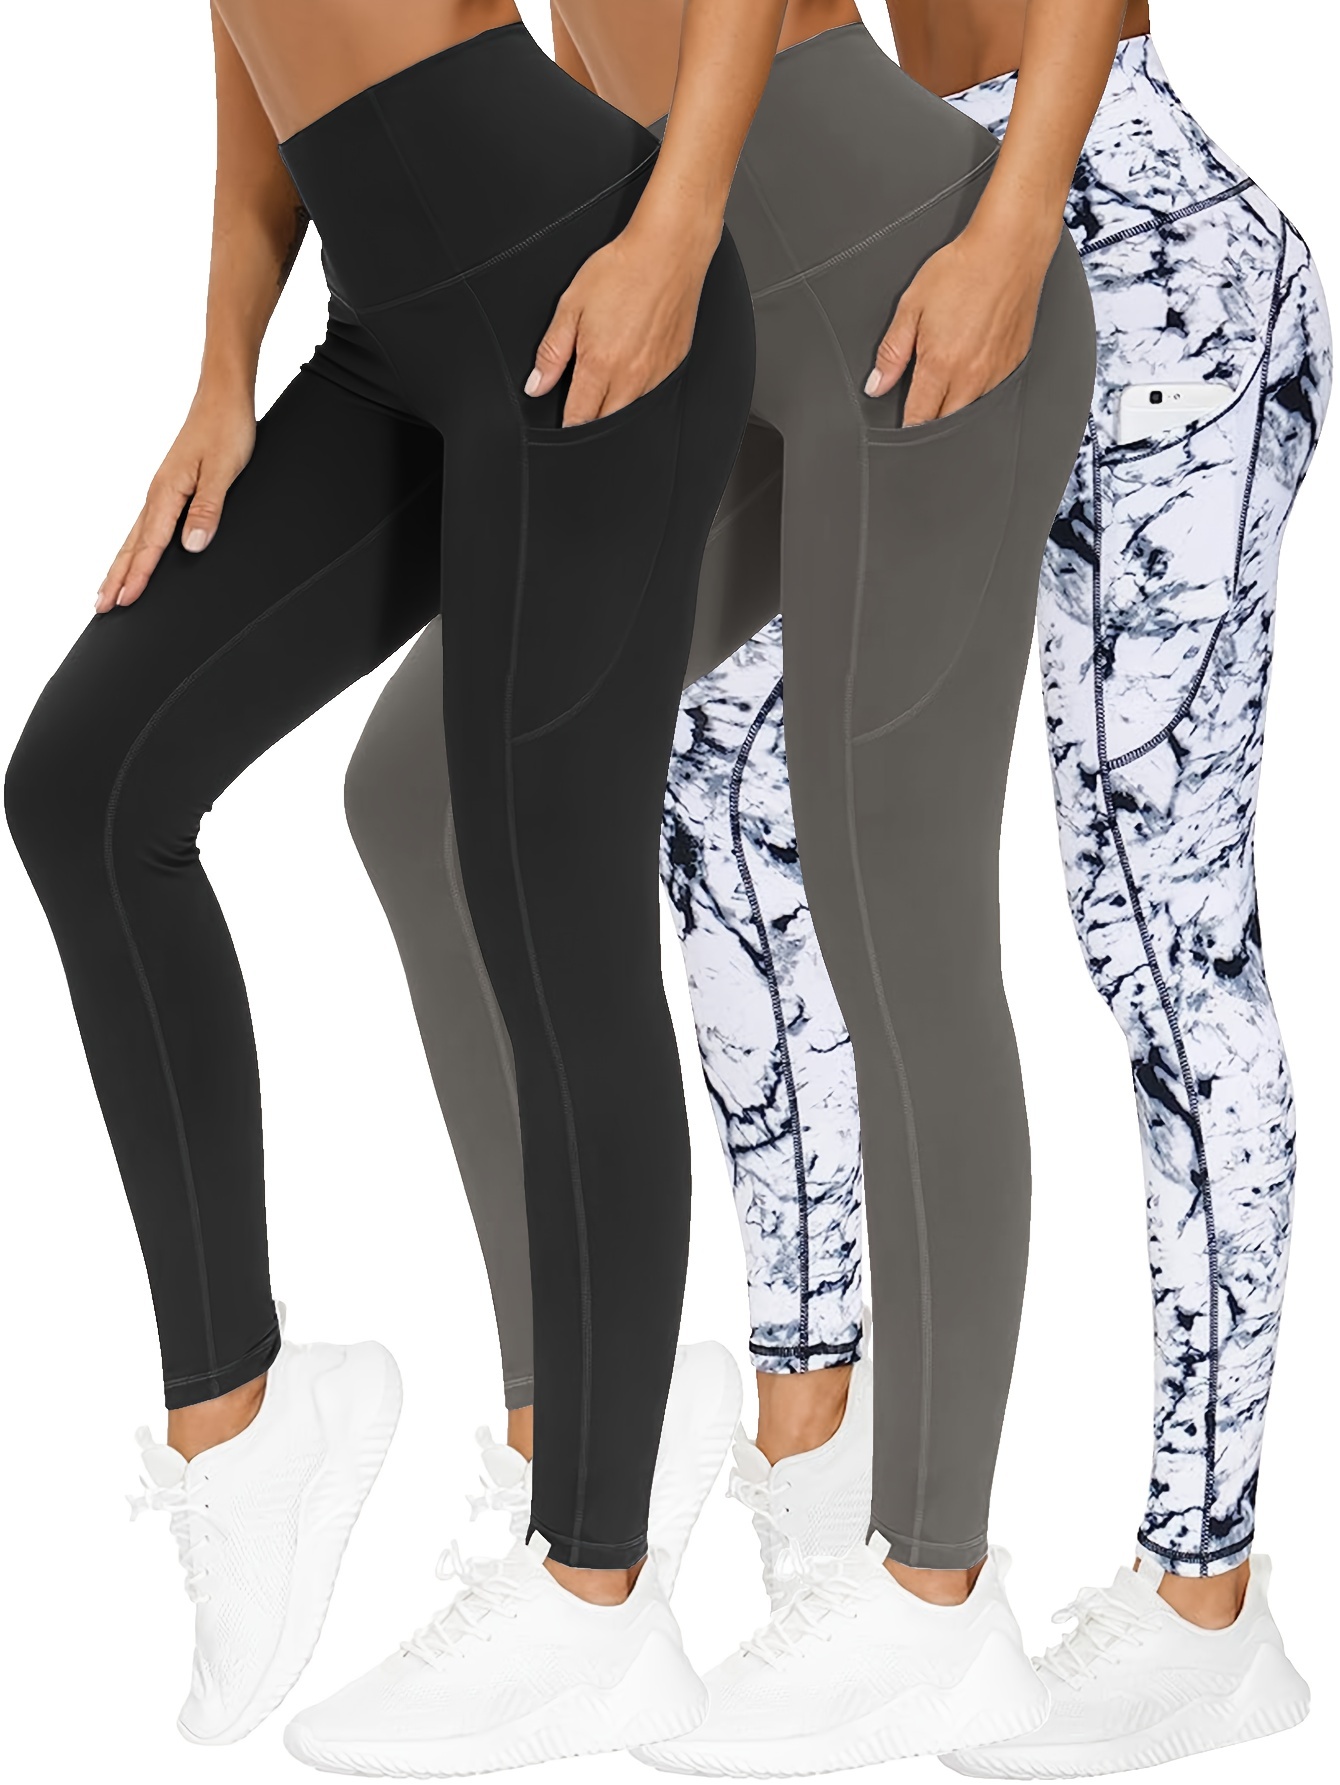 3pcs/Set Plus Size Women'S Yoga Pants With Pockets, High Waist